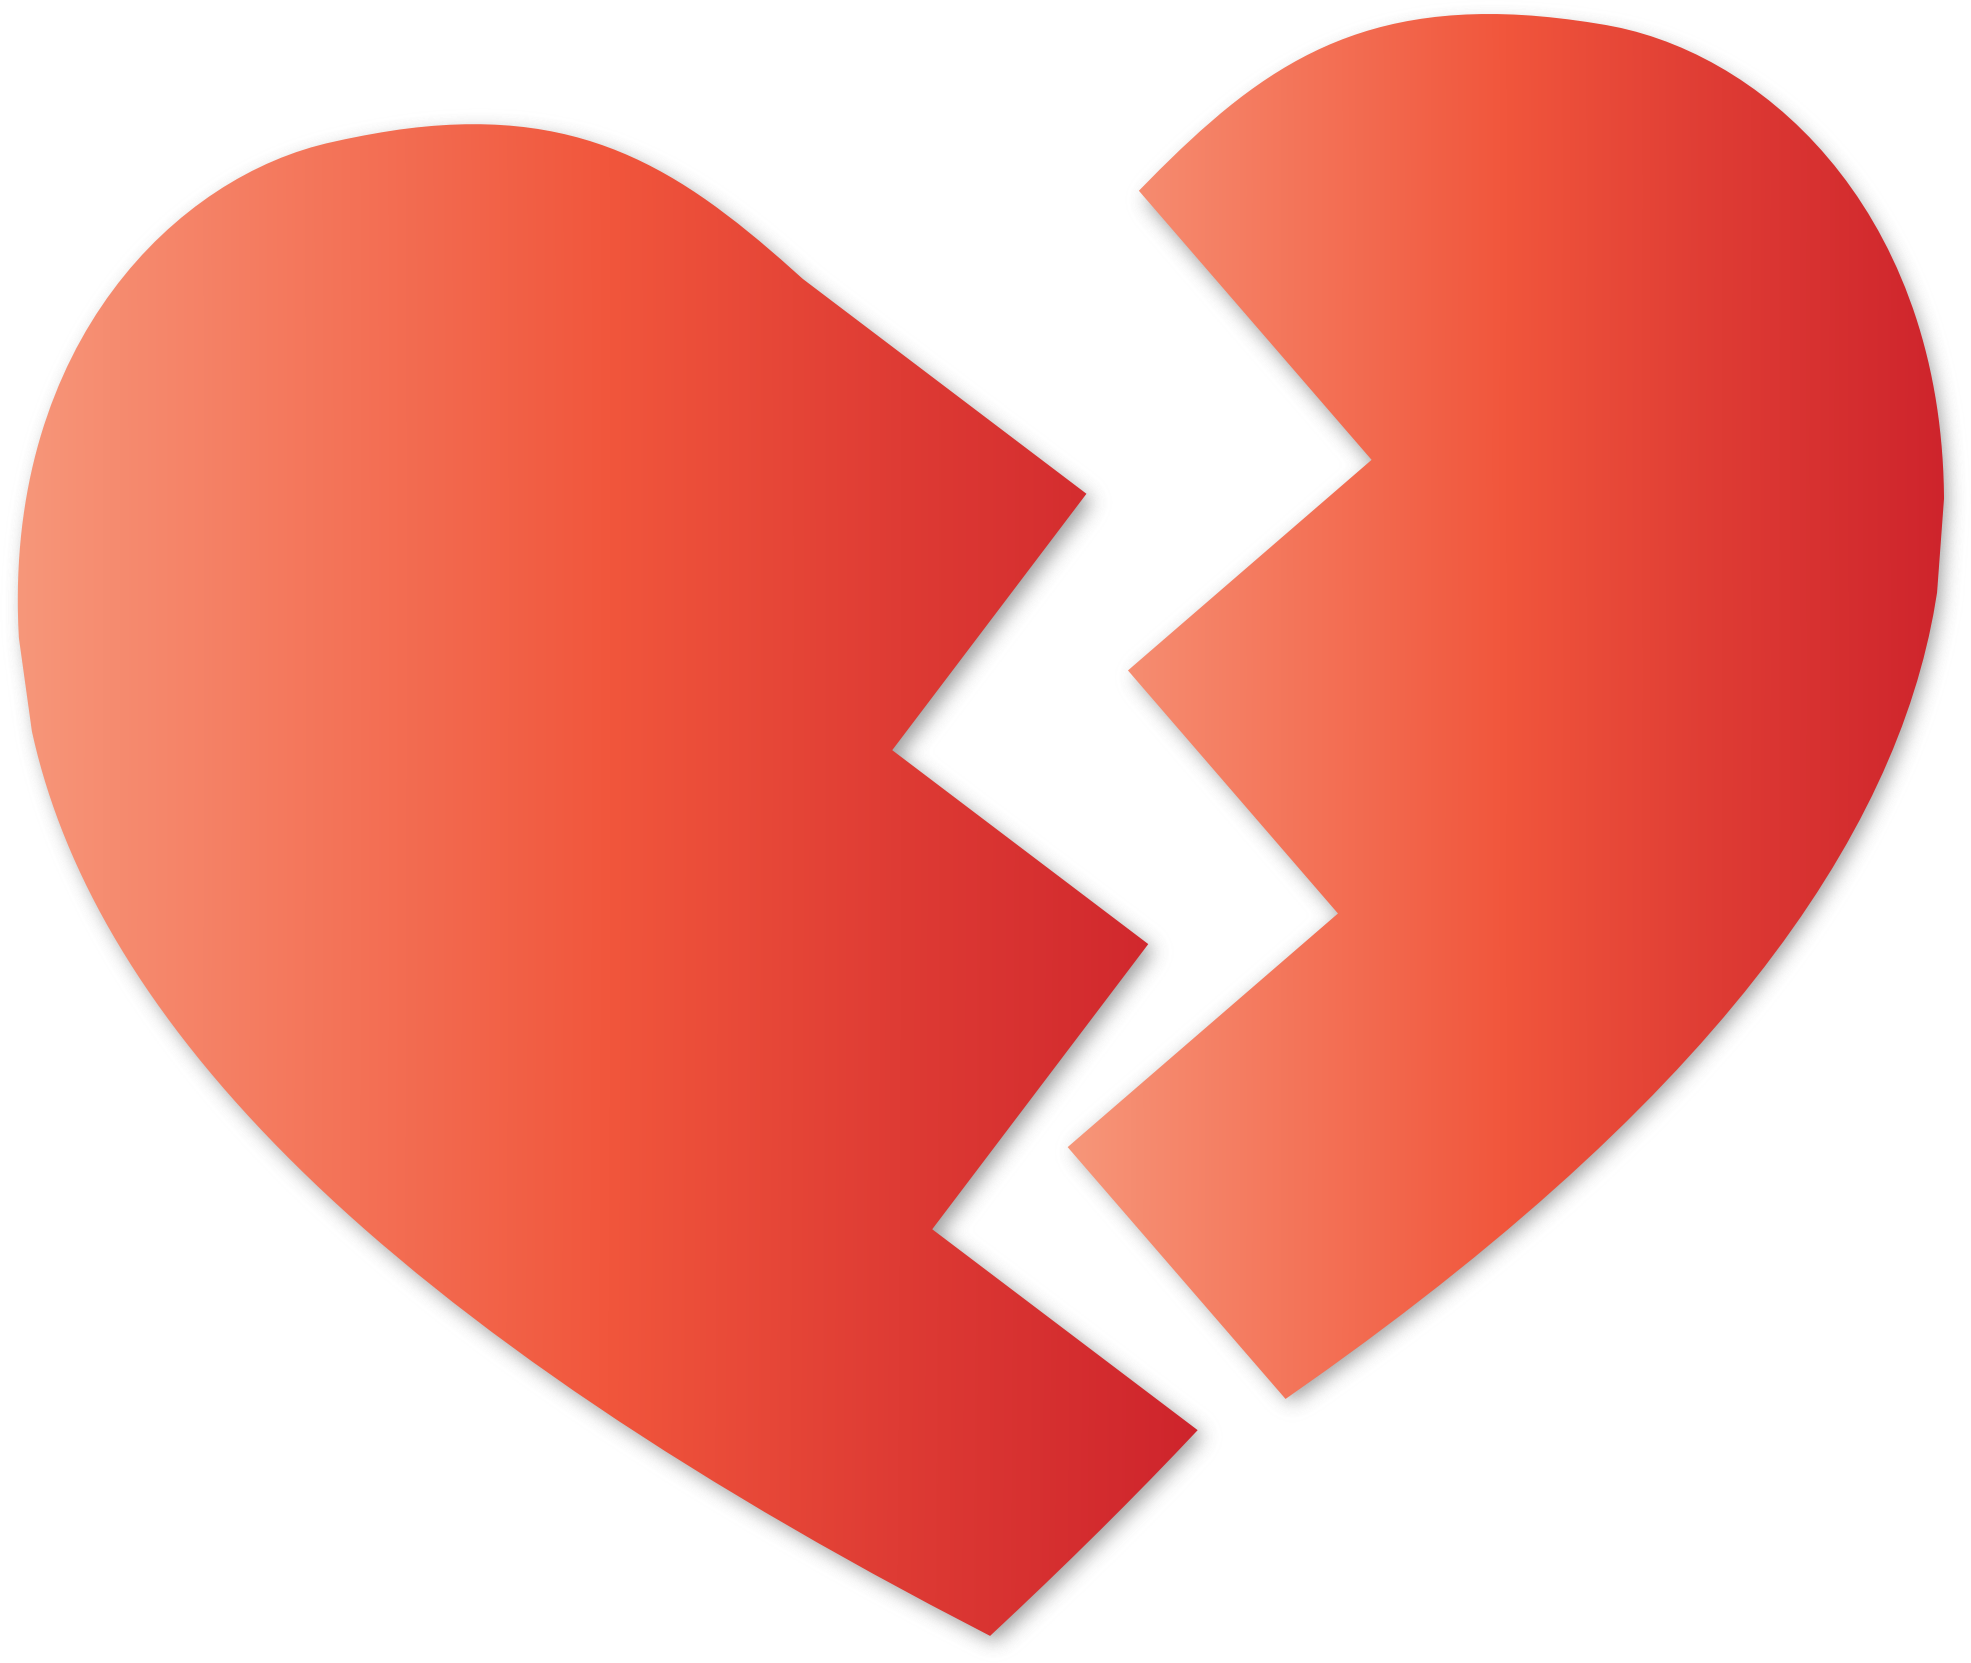 Broken Heart Vector Clipart image - Free stock photo ...